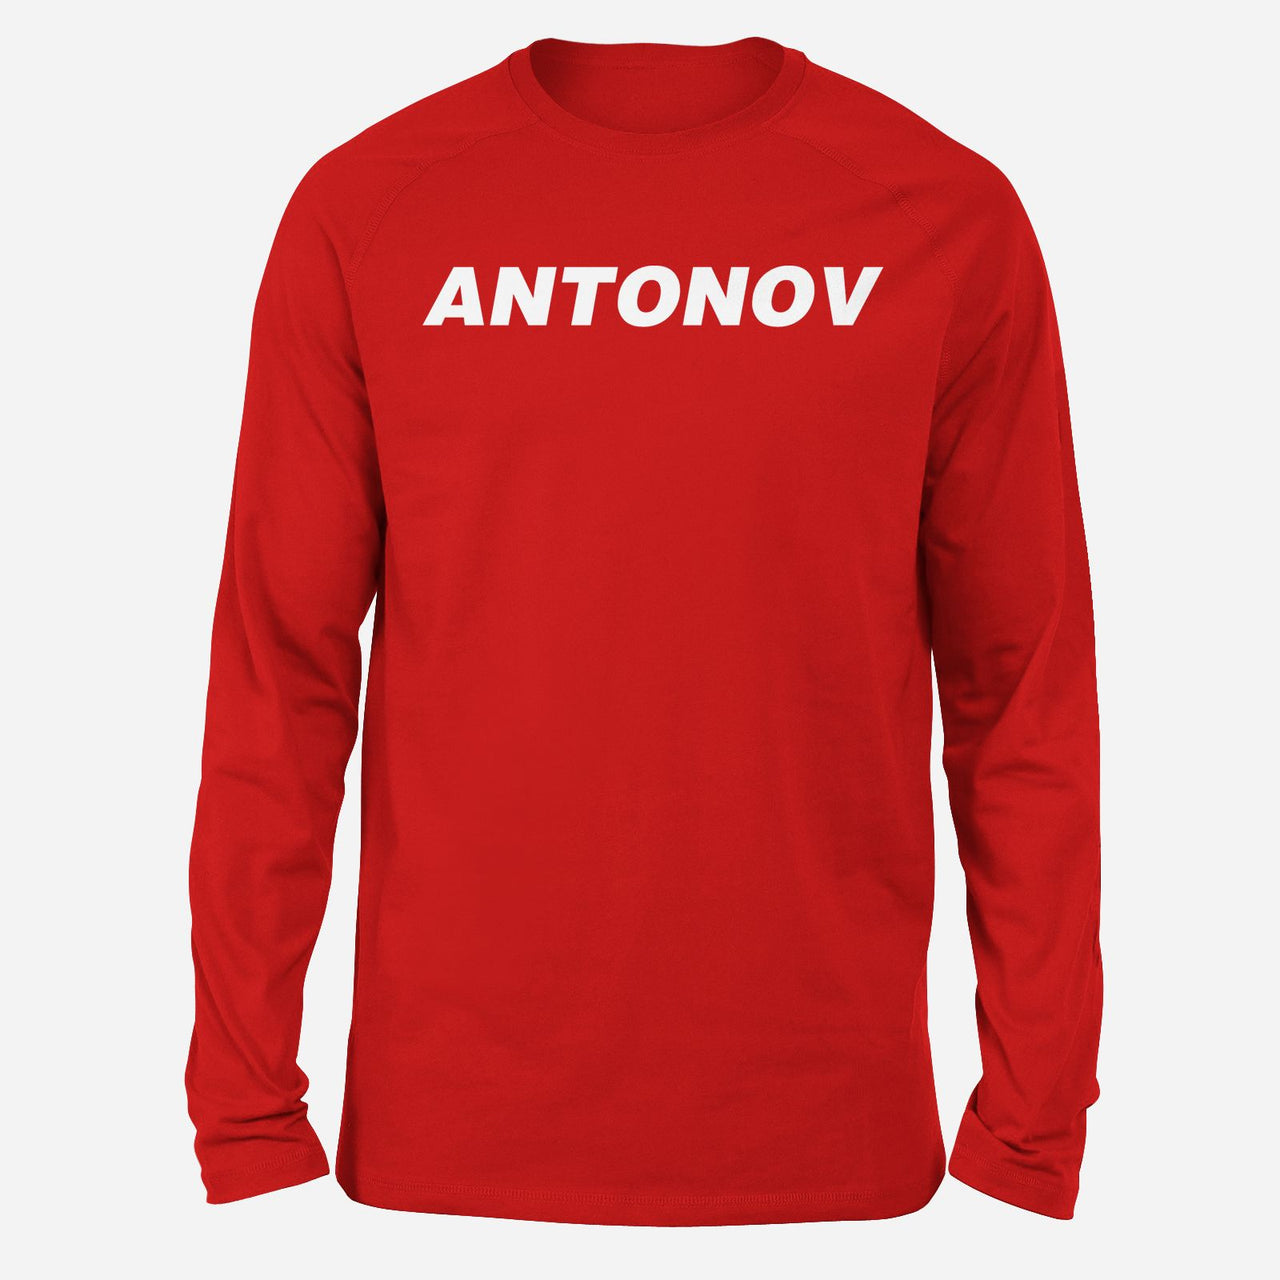 Antonov & Text Designed Long-Sleeve T-Shirts